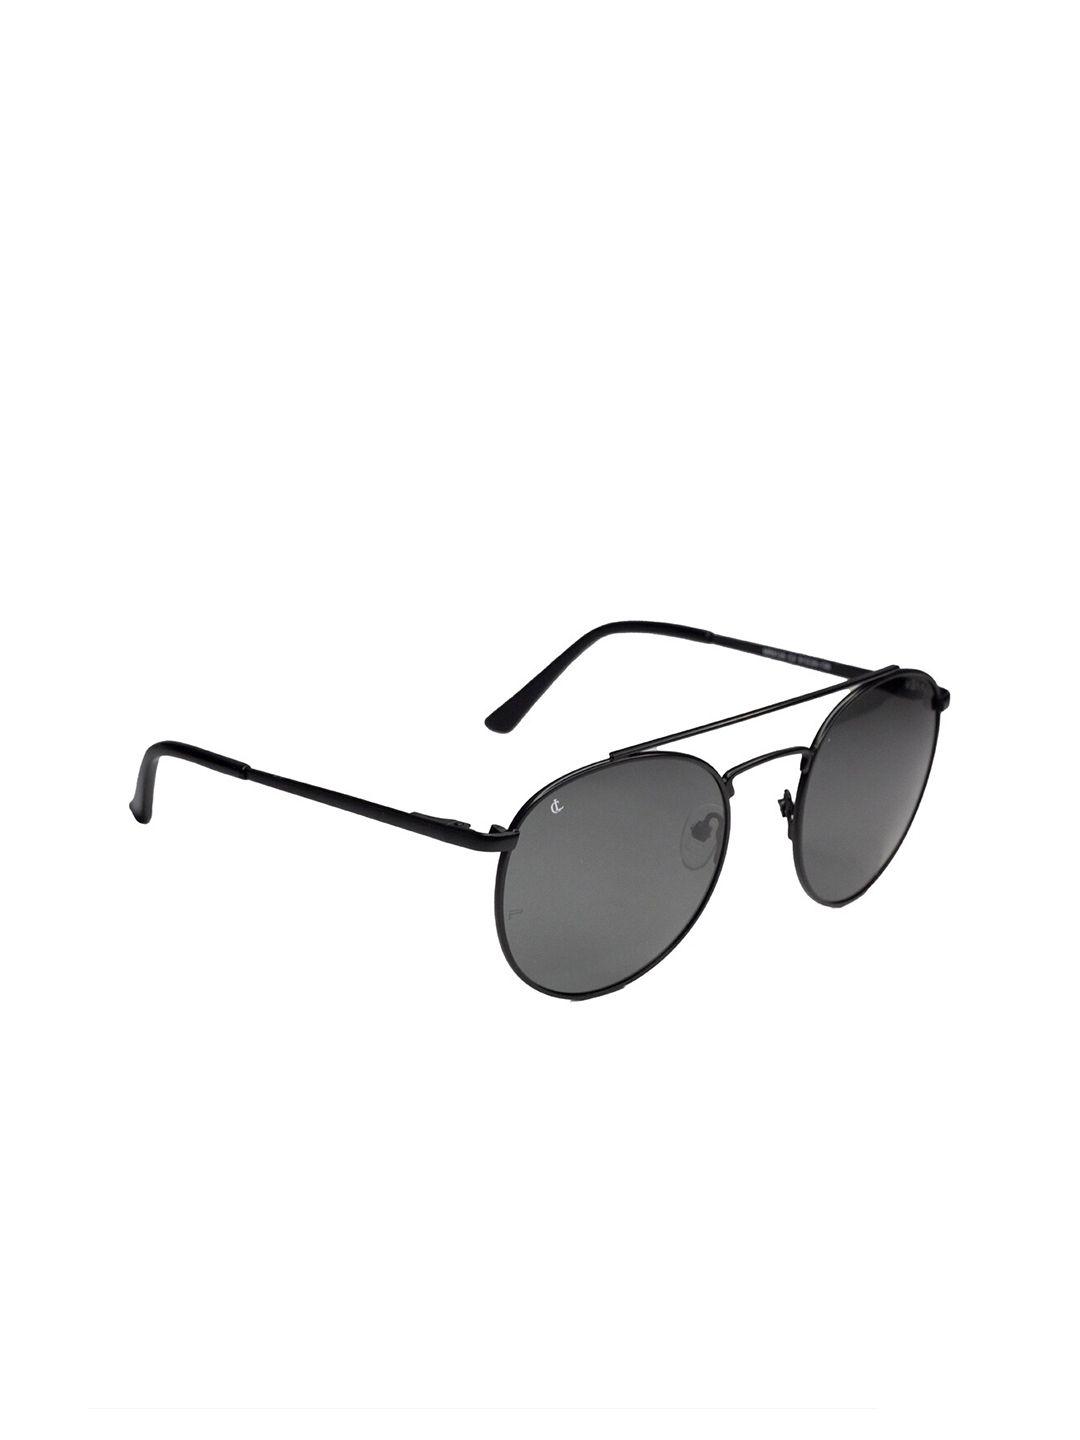 charles-london-unisex-grey-polarised-round-sunglasses-mr-9126-c2-51-s